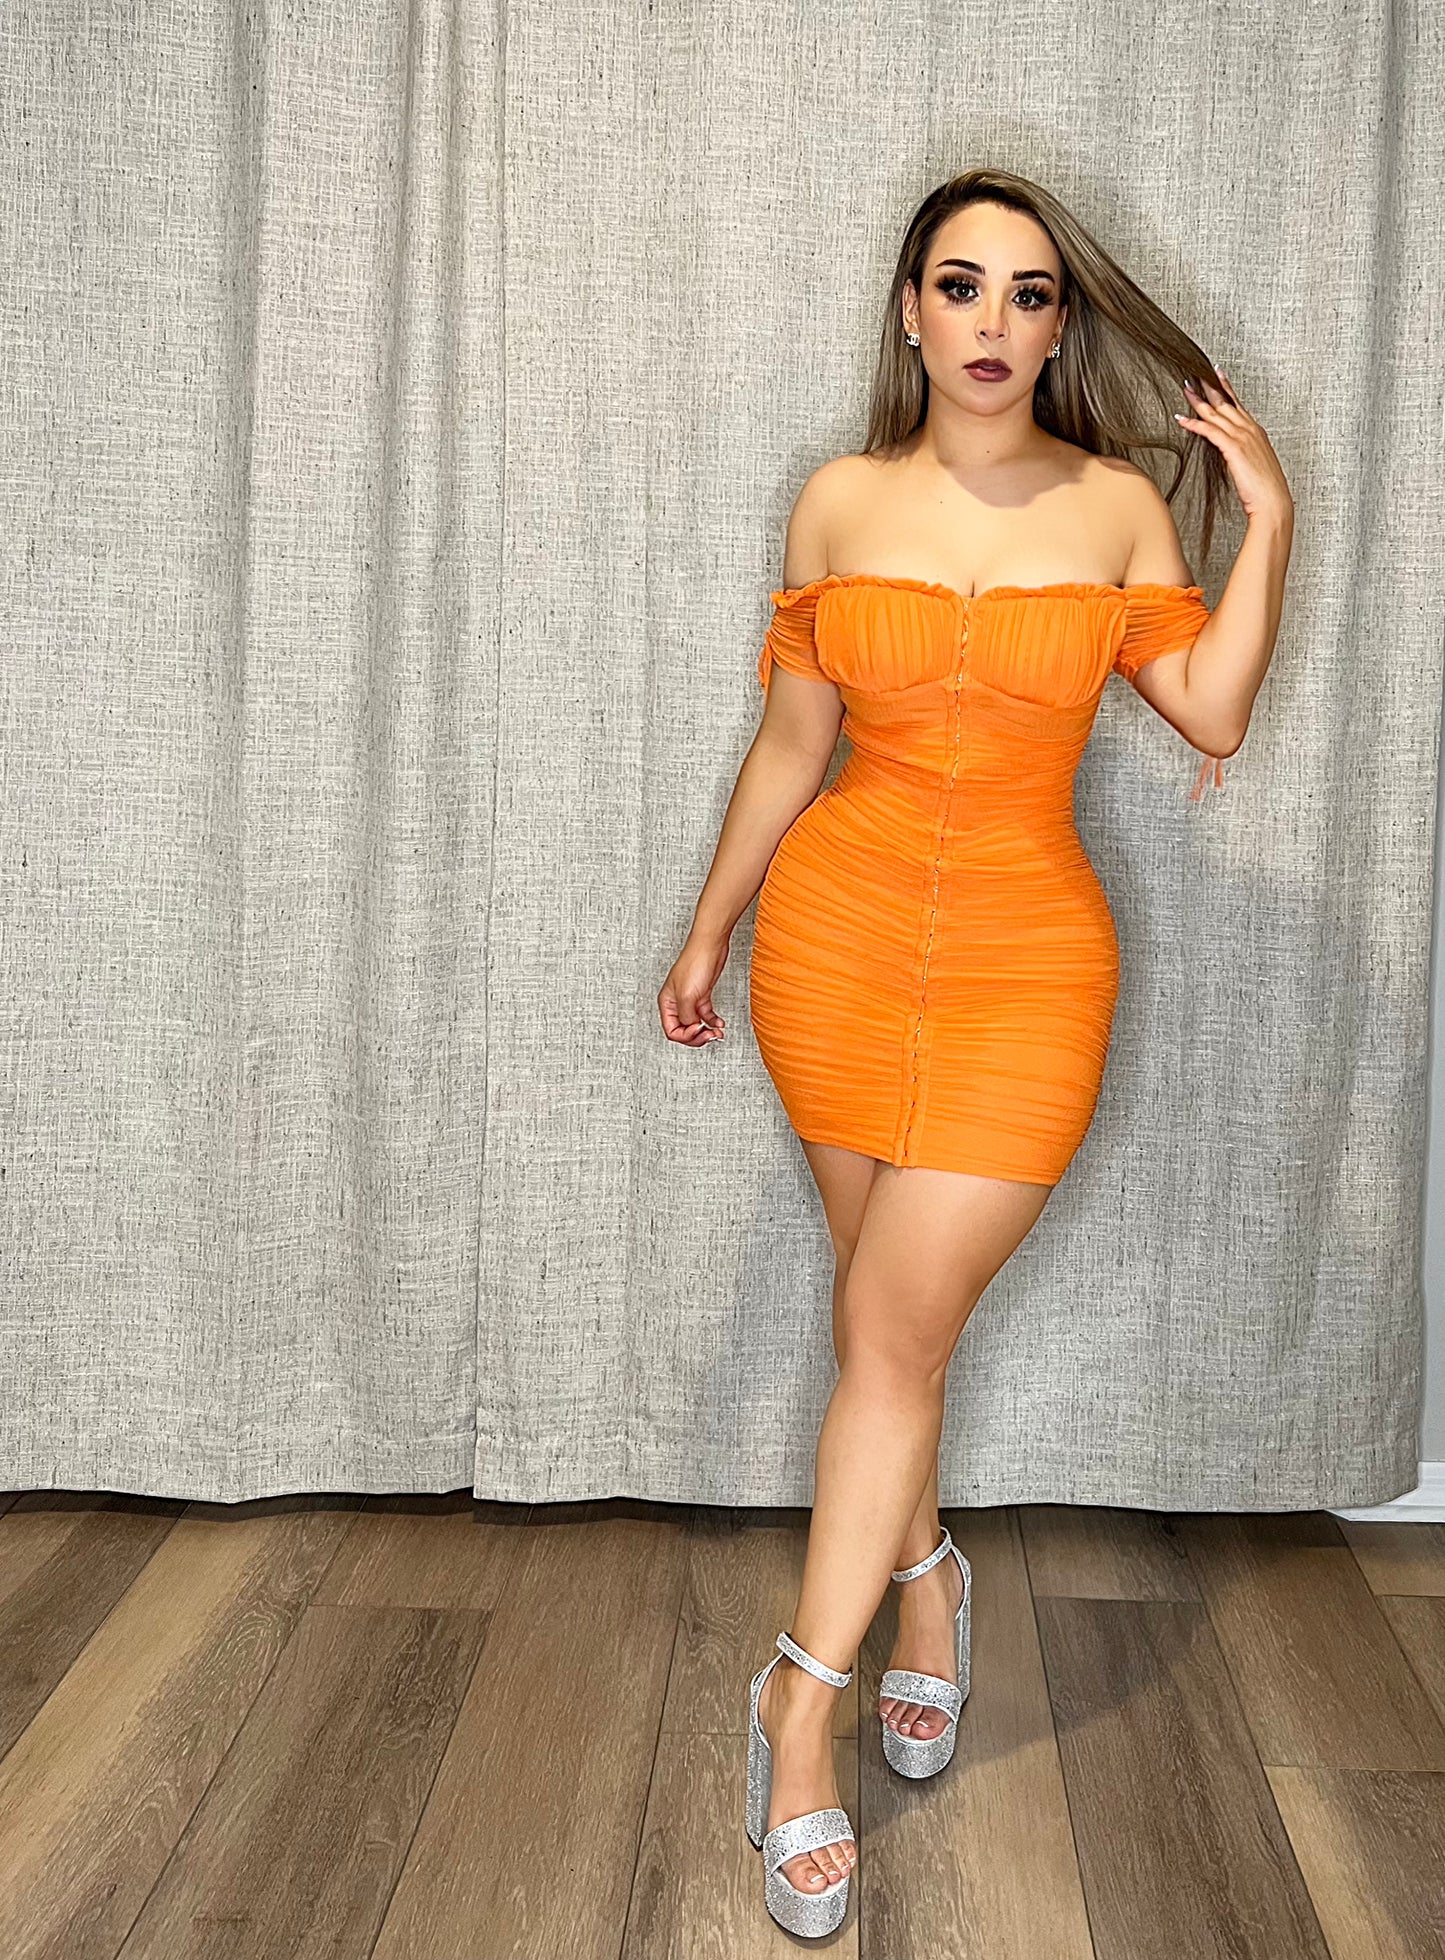 Vestido naranja corset